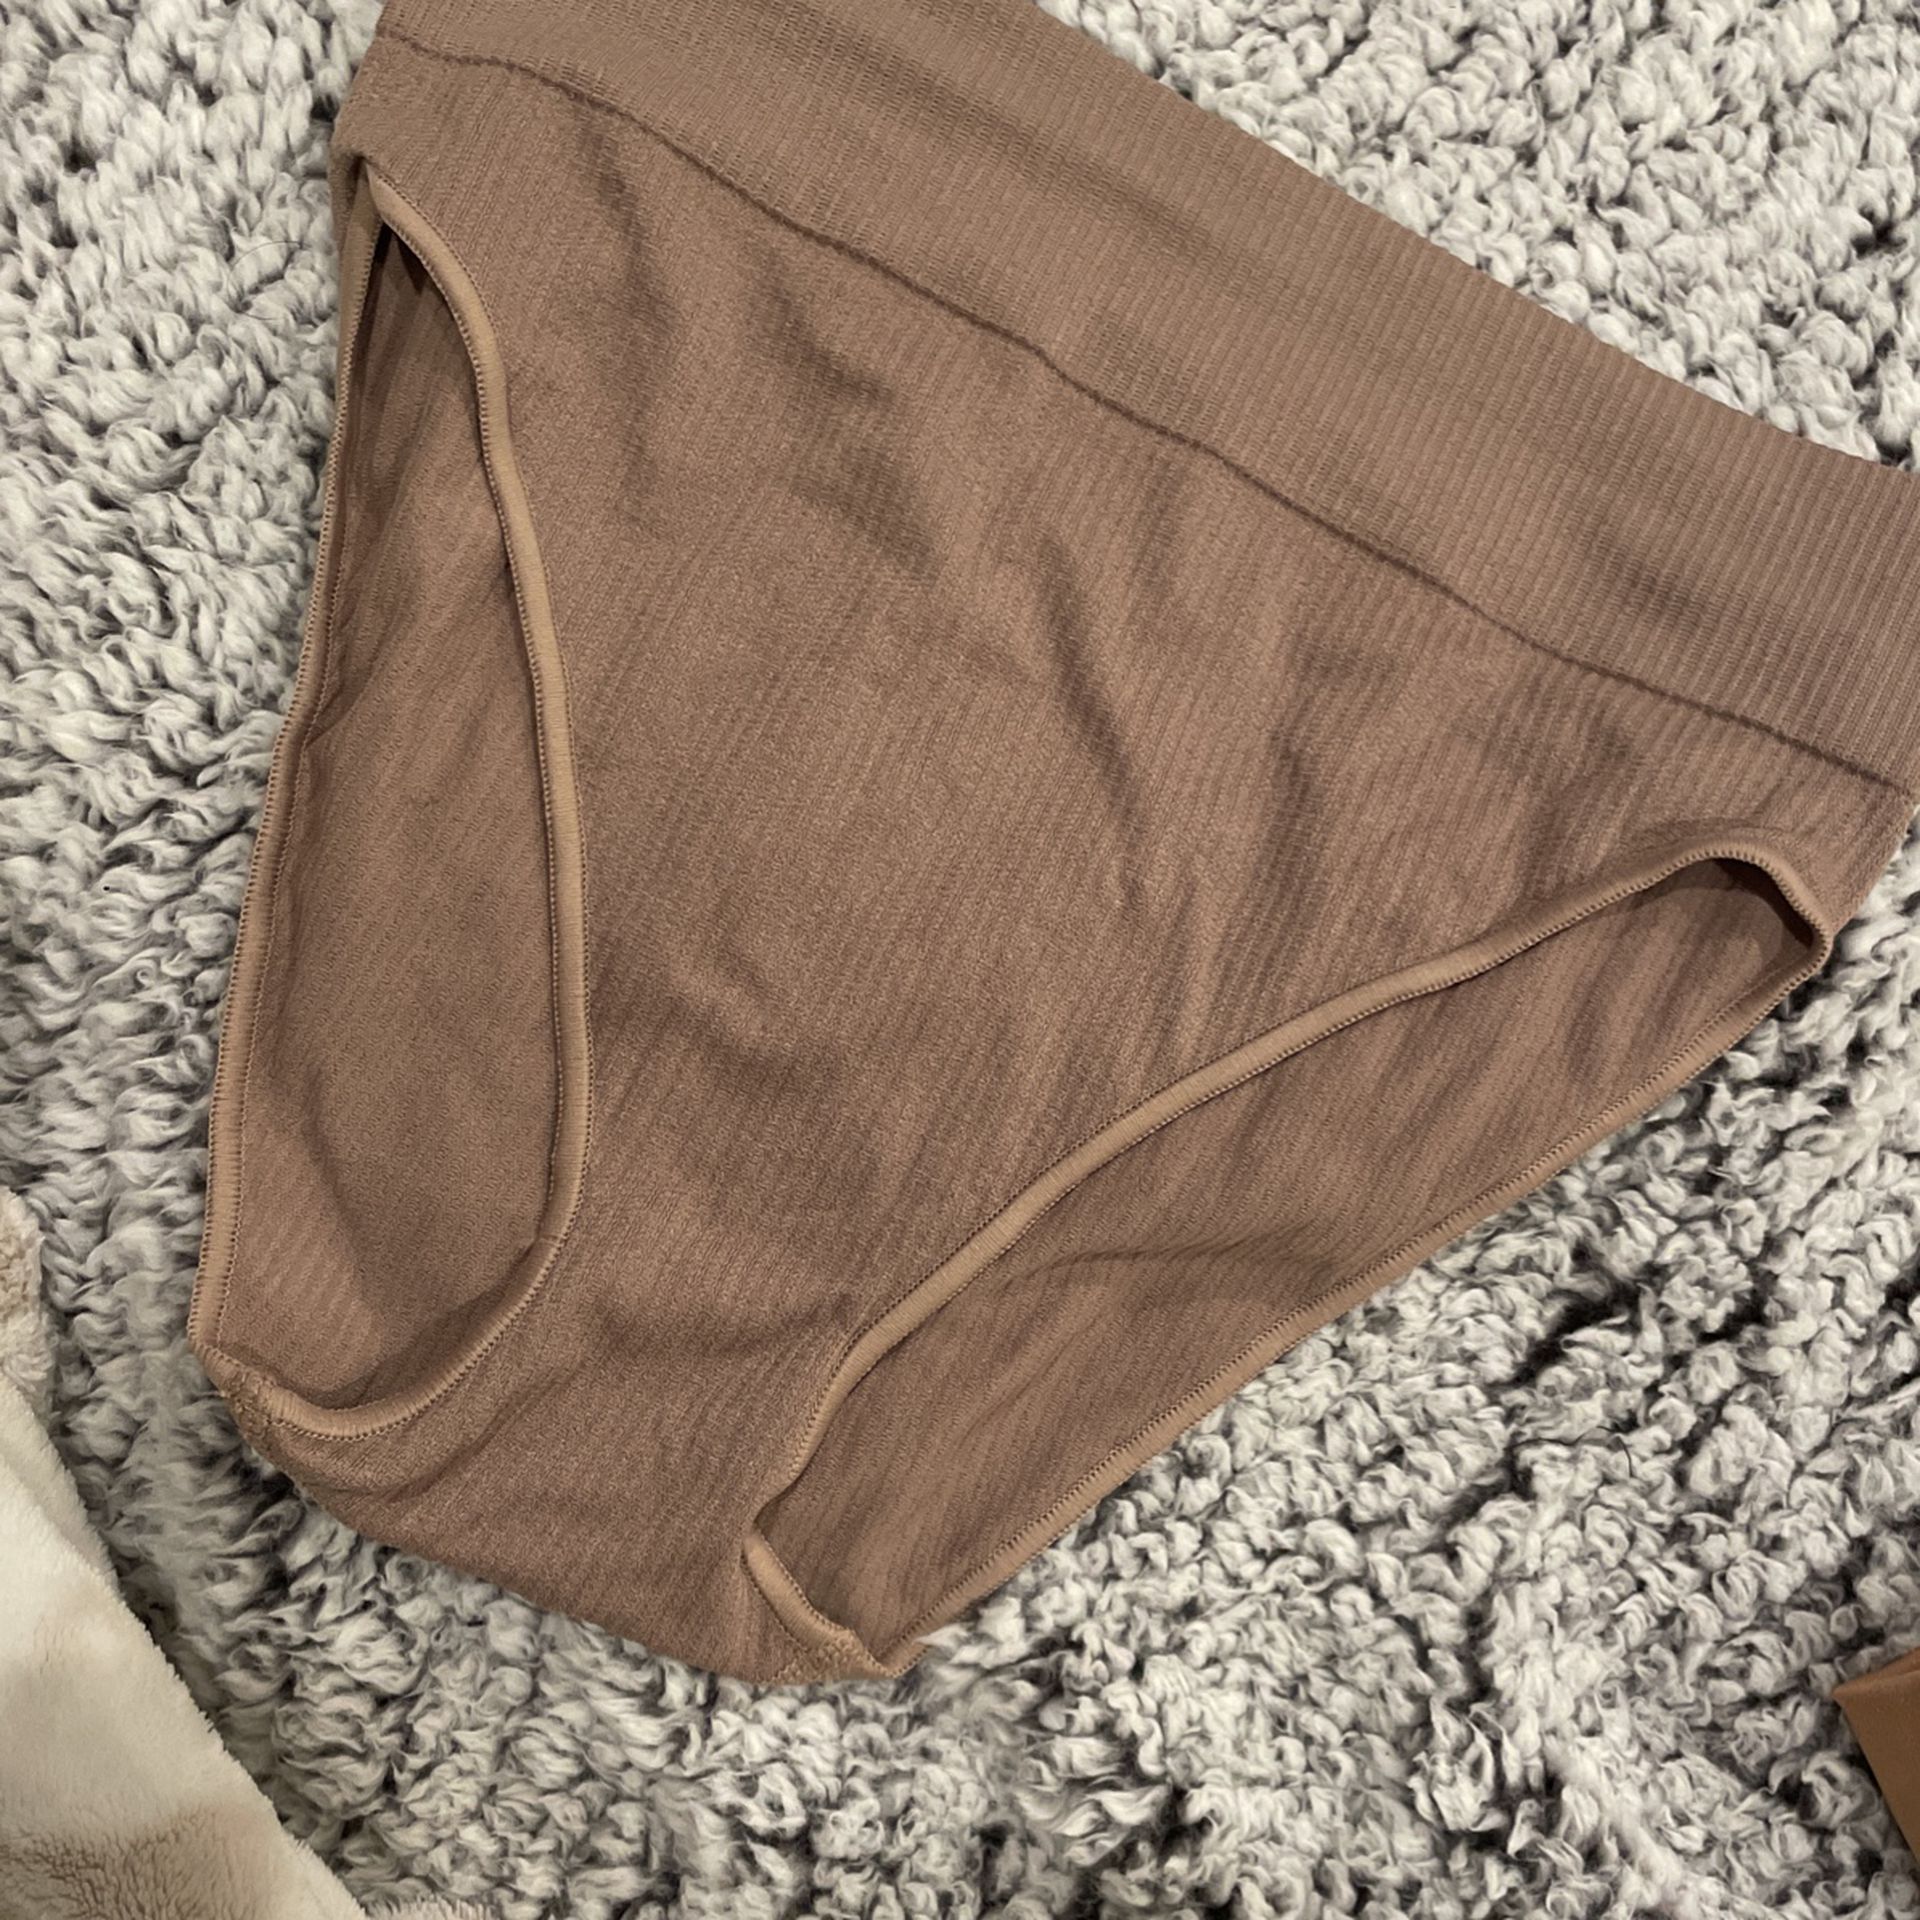 Used panties for Sale in Santa Ana, CA - OfferUp